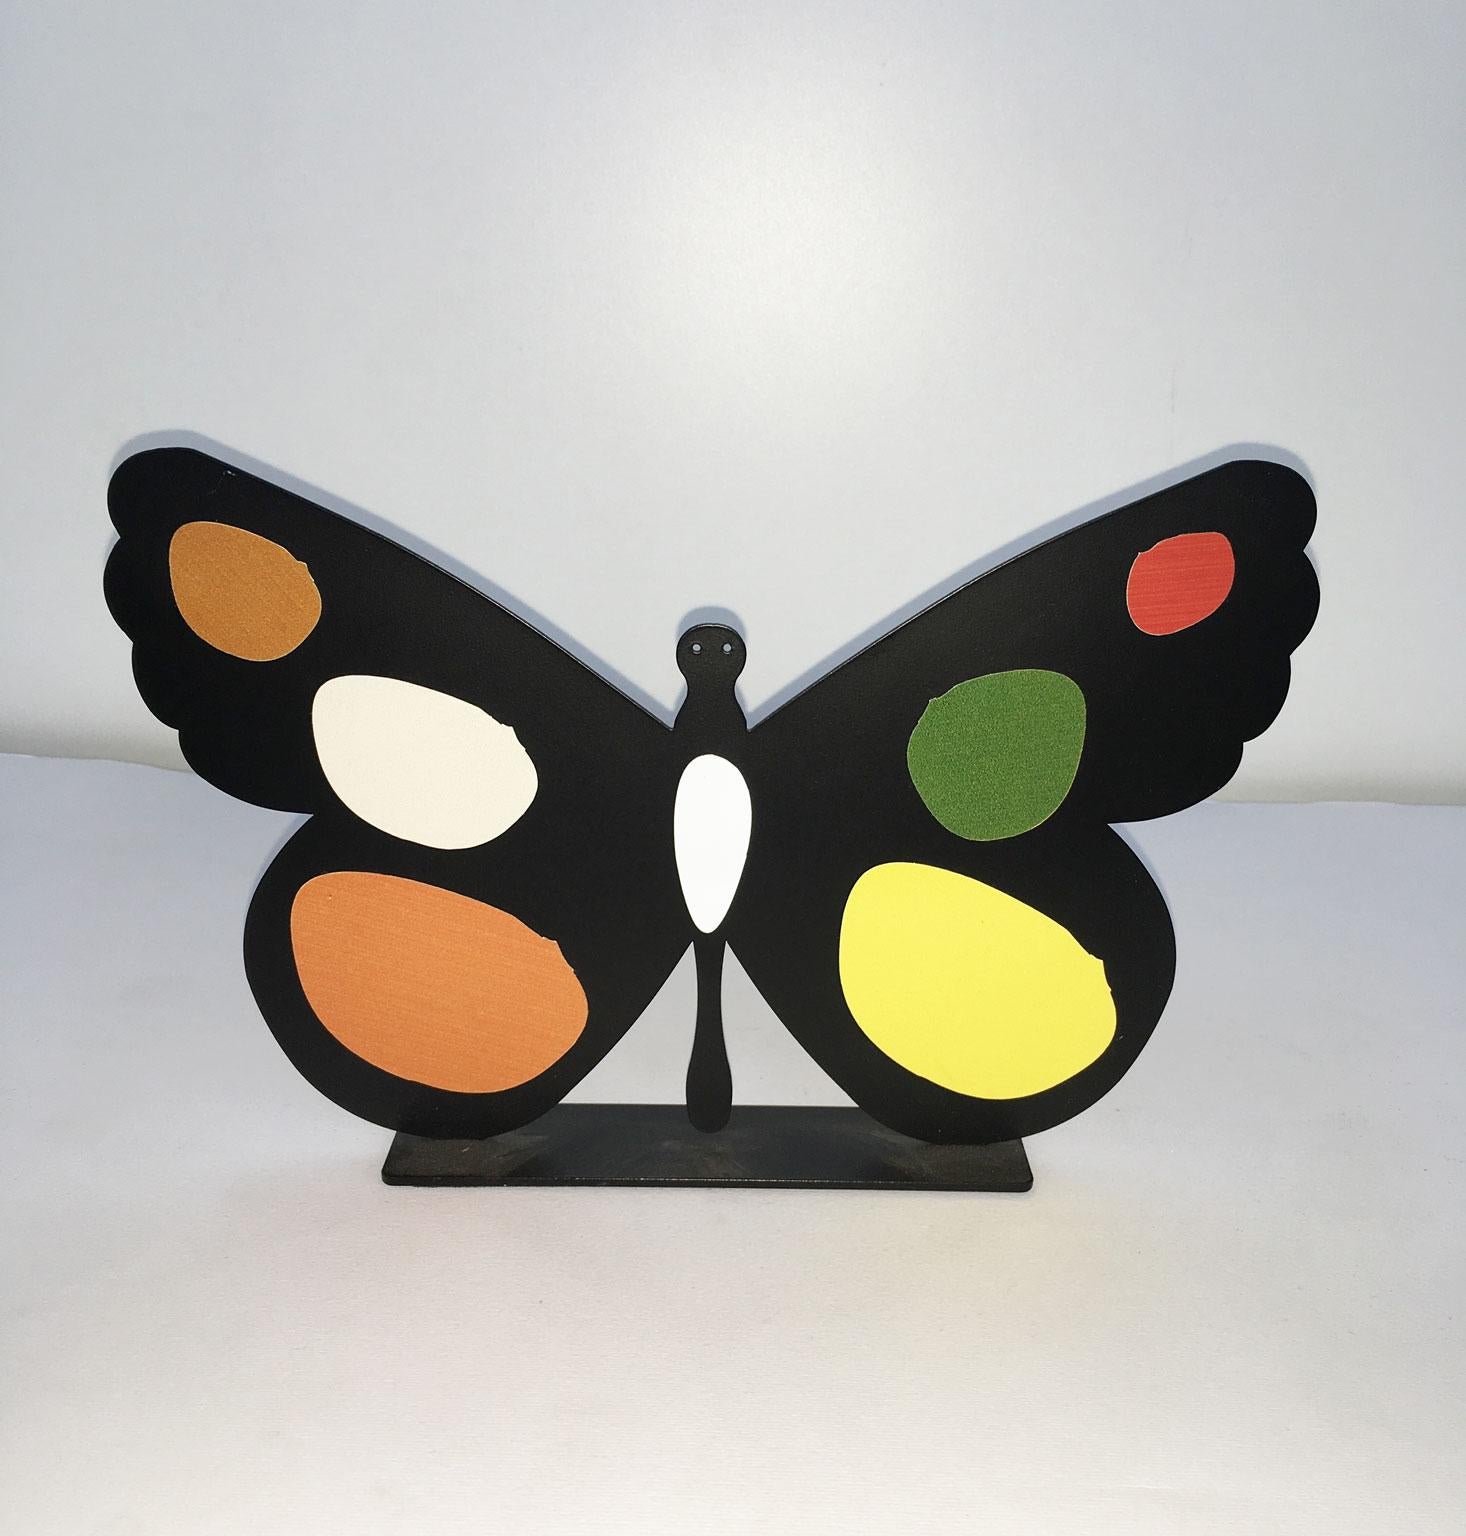 Sculpture de papillon en métal peint en noir de Bruno Chersicla Volavola, Italie, 1980